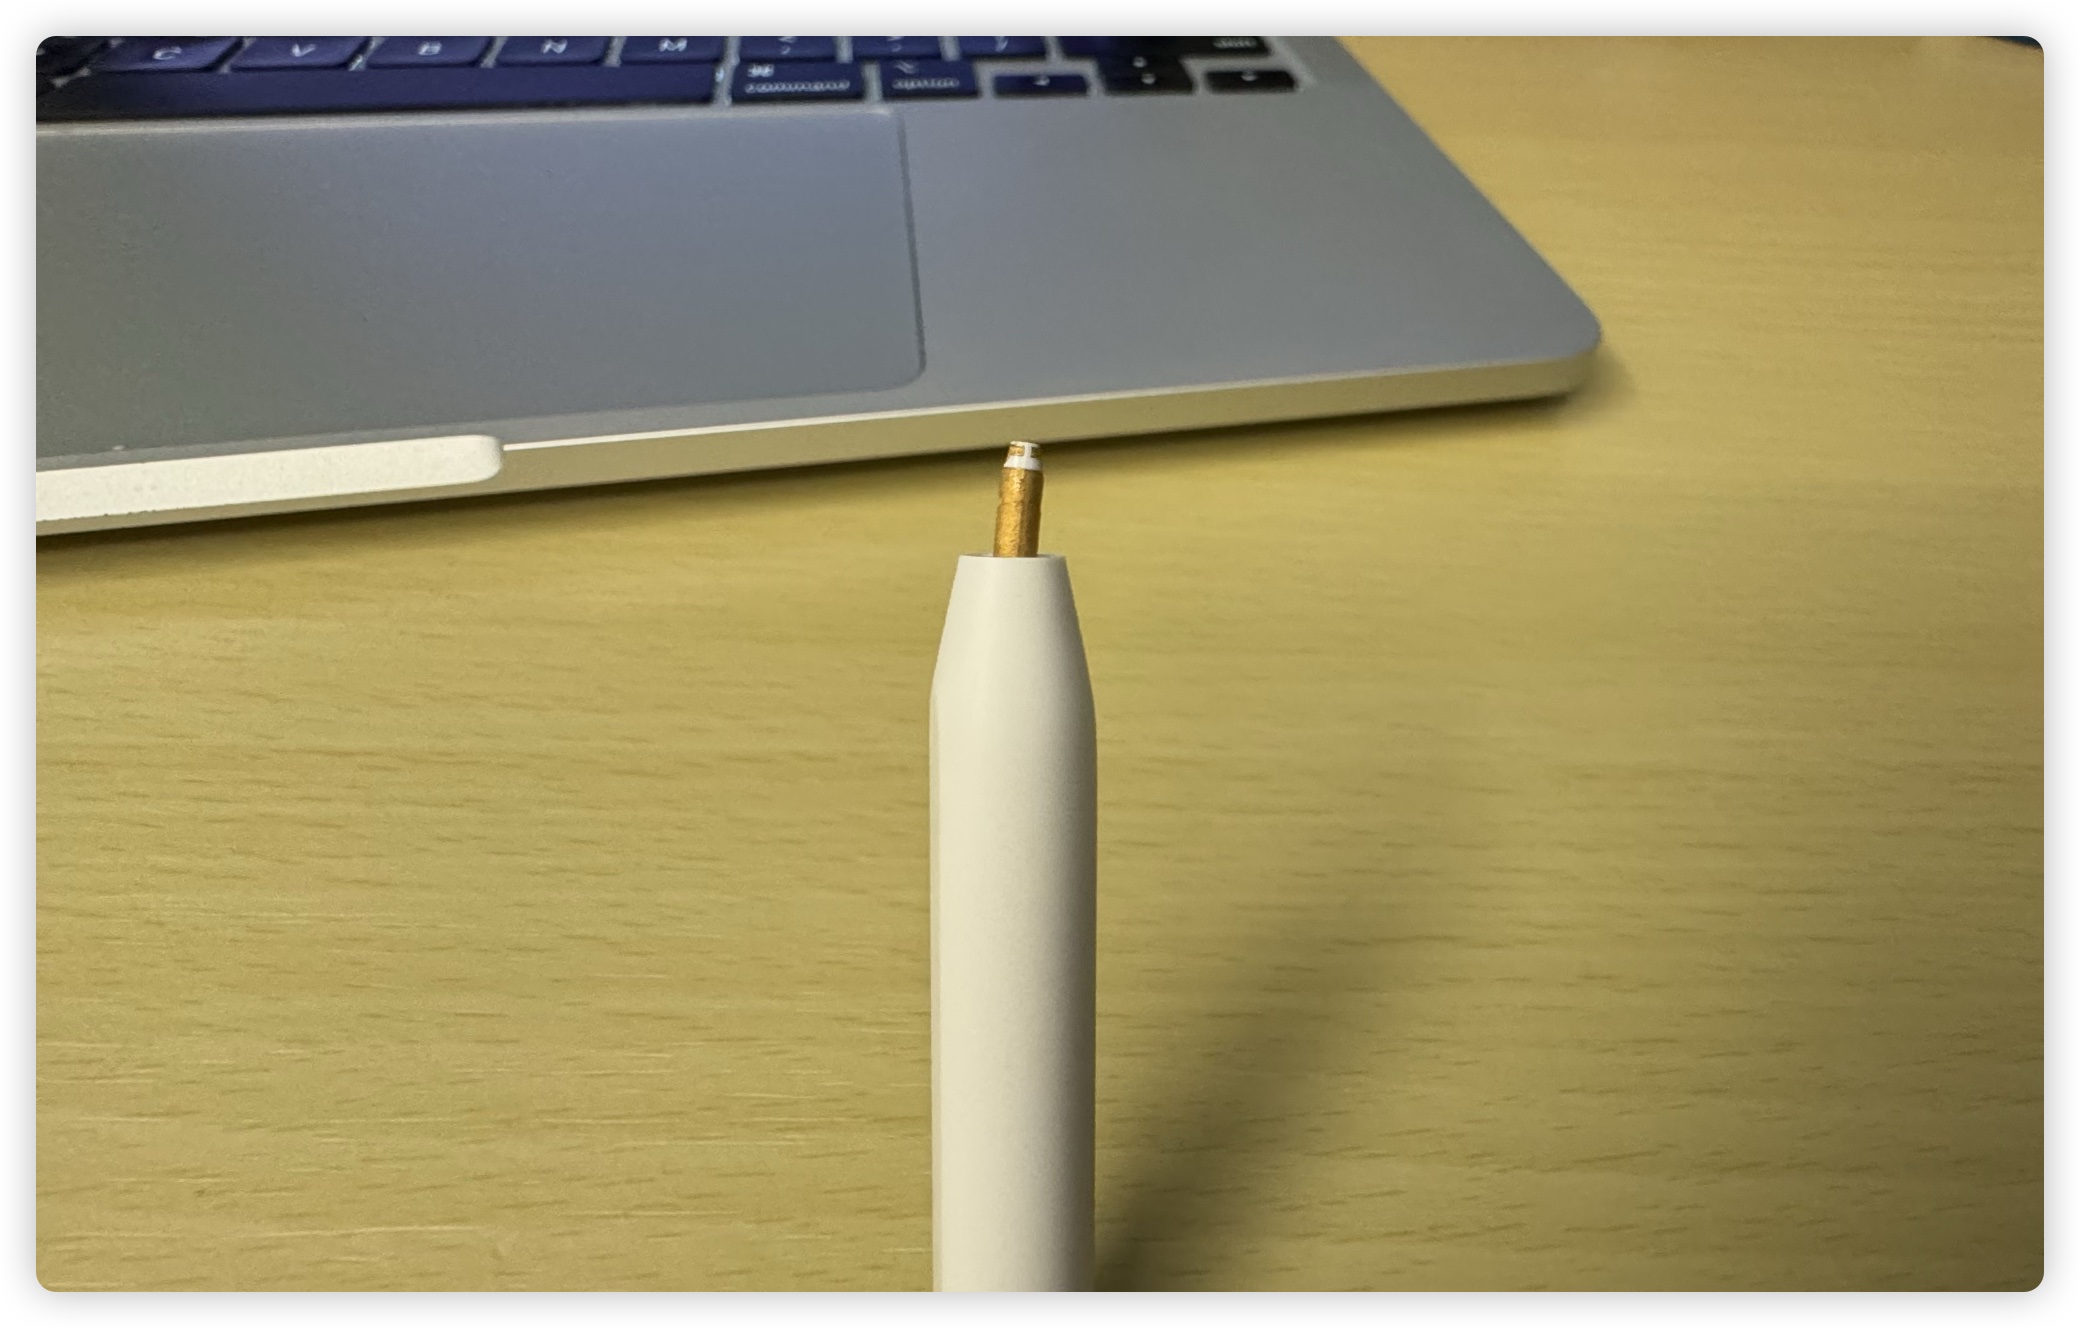 Apple Pencil 摔到 沒反應 維修 換新 價格 保固